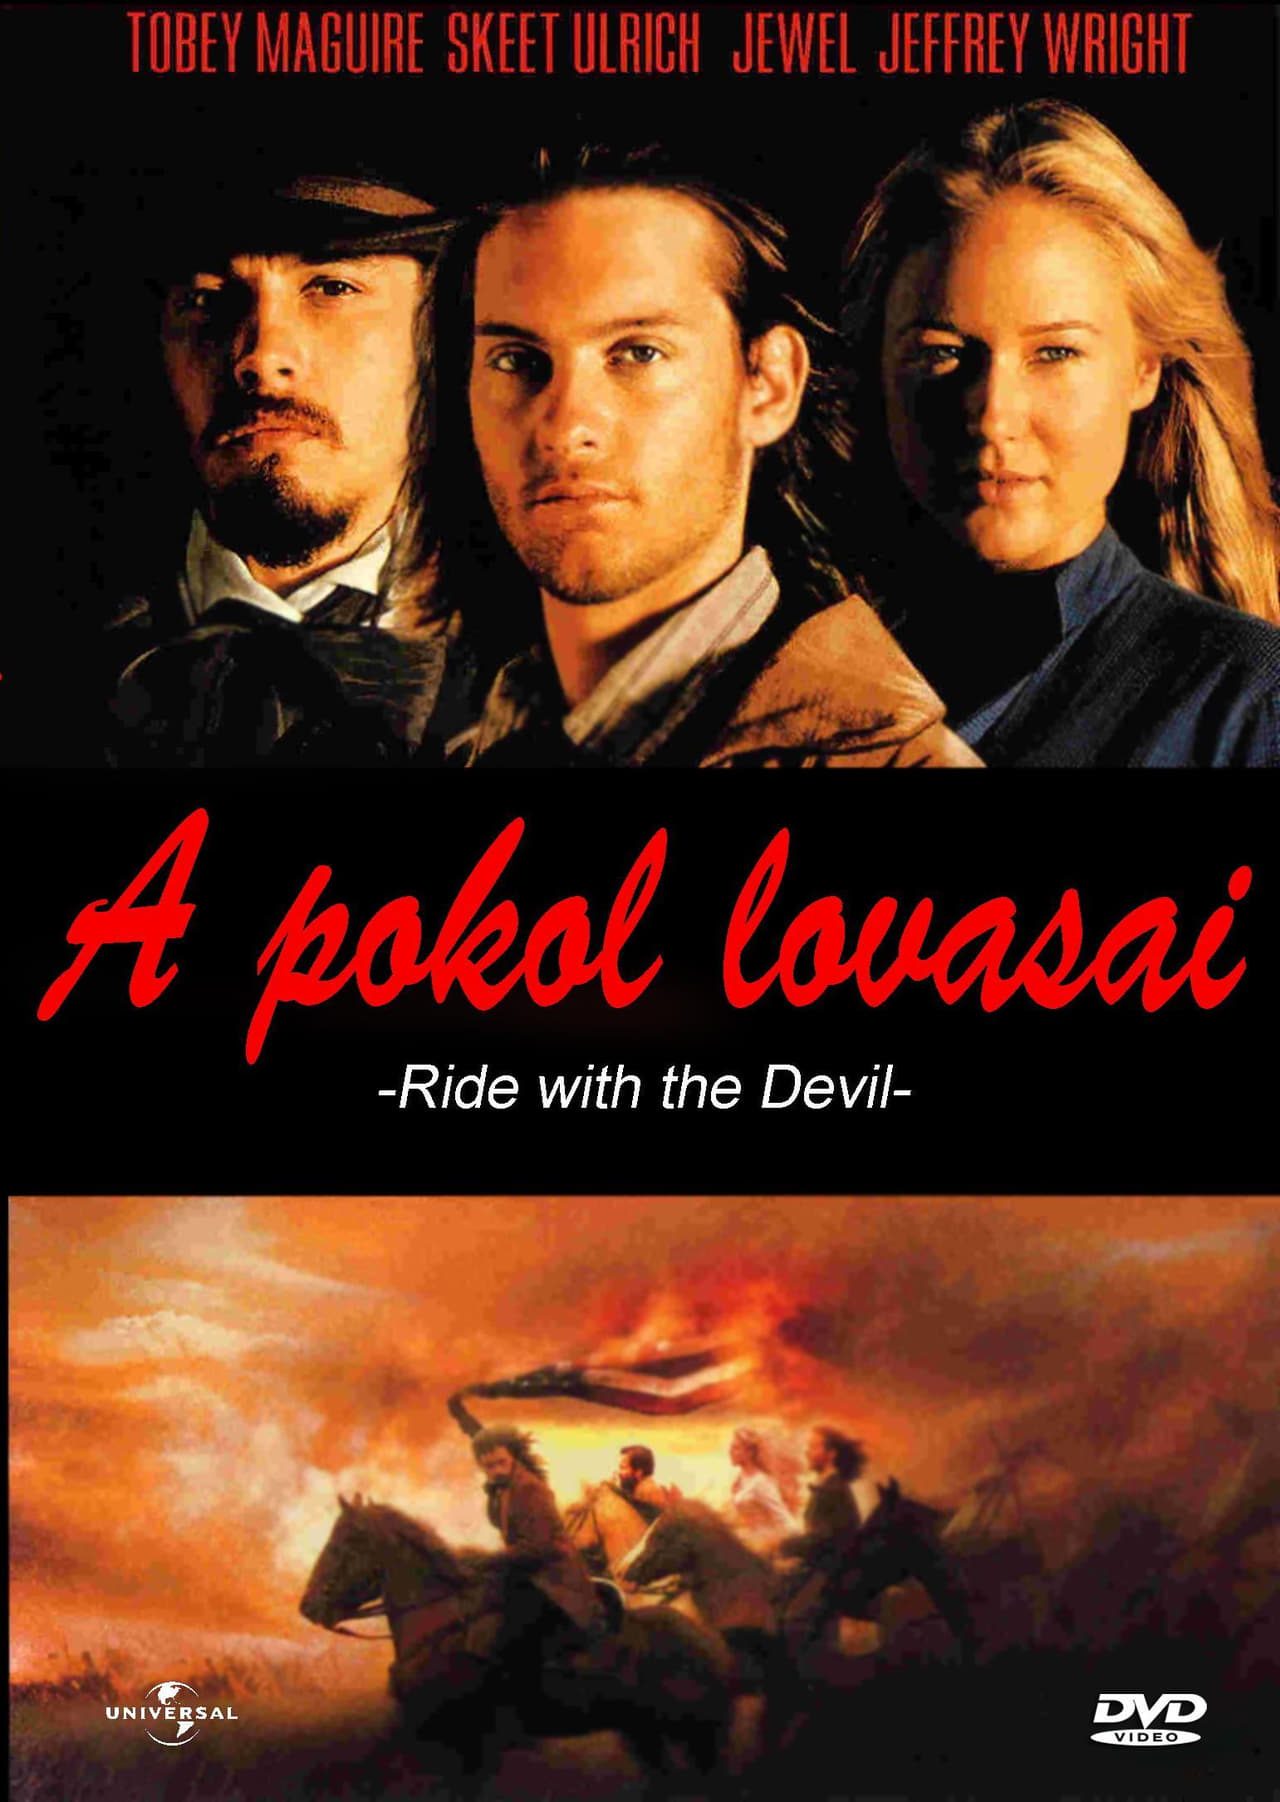 A pokol lovasai online teljes film (1999) 